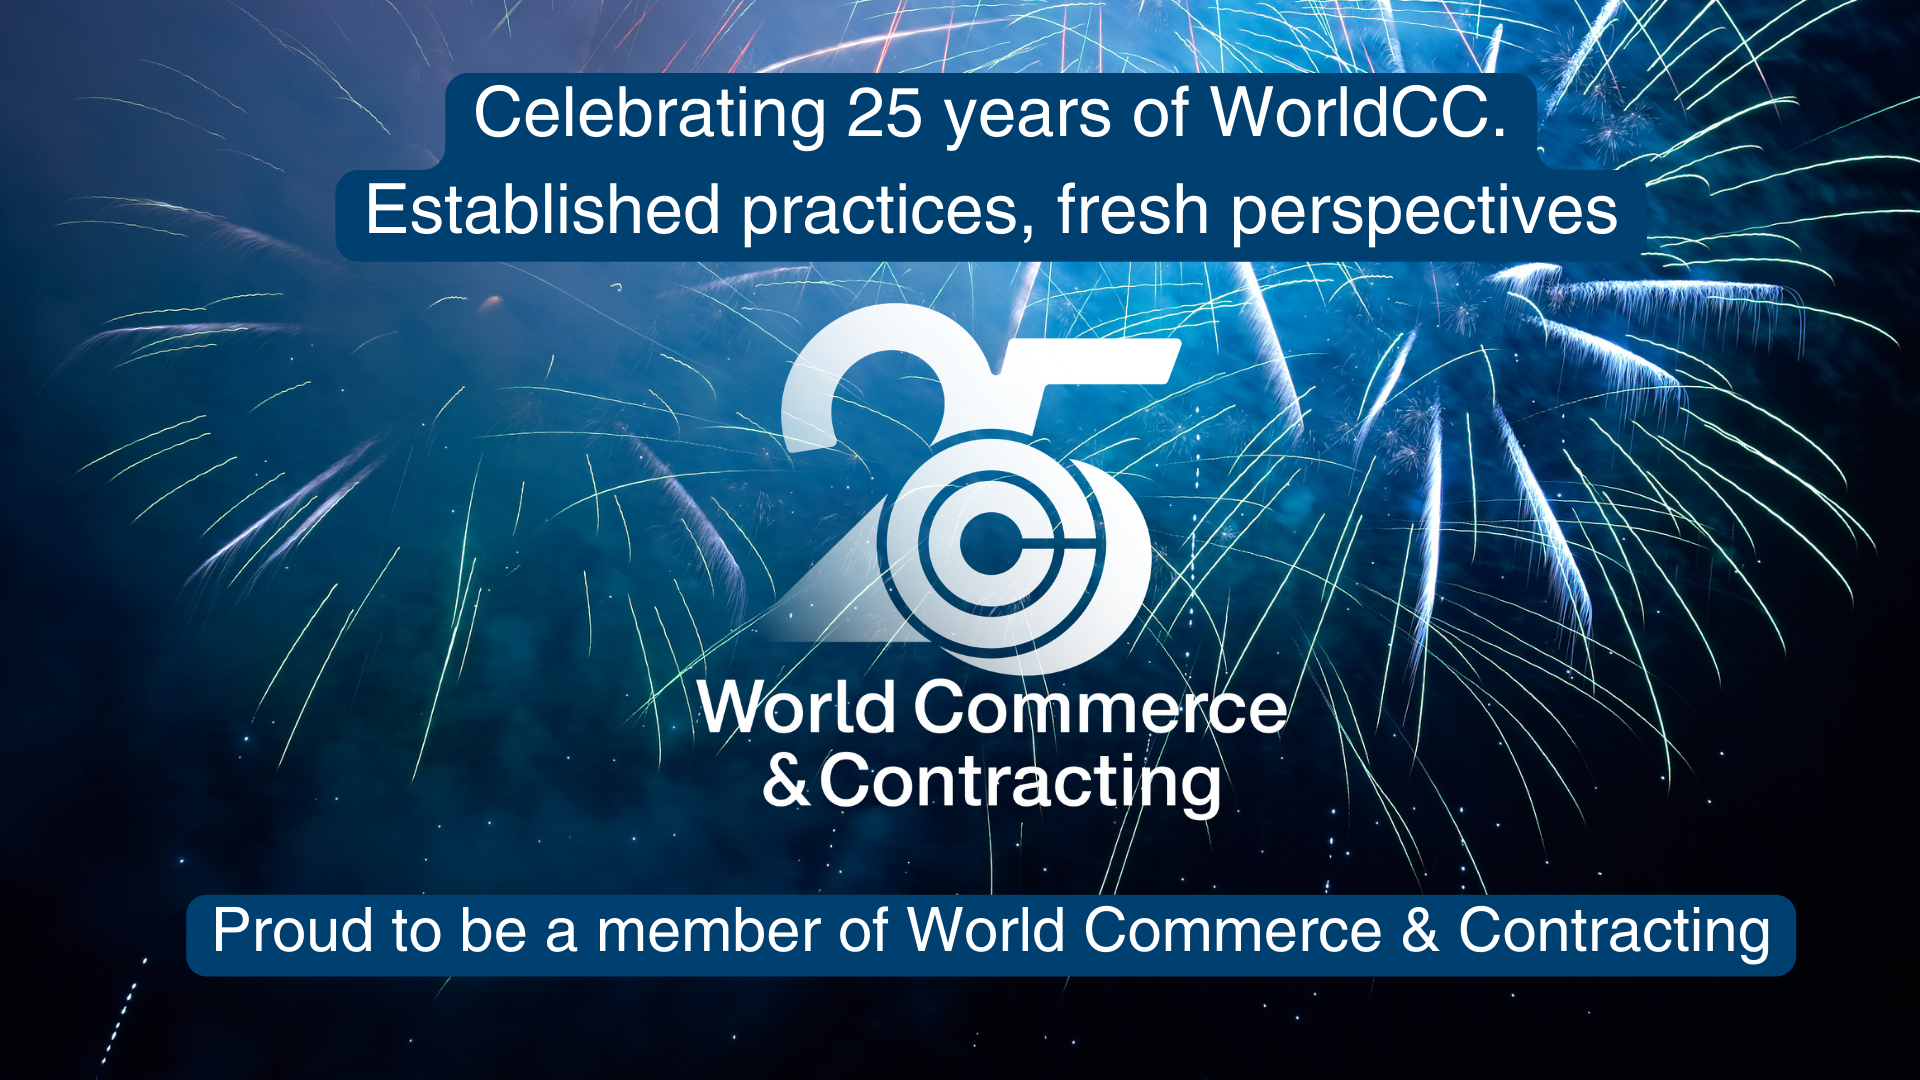 WorldCC Member Celebration